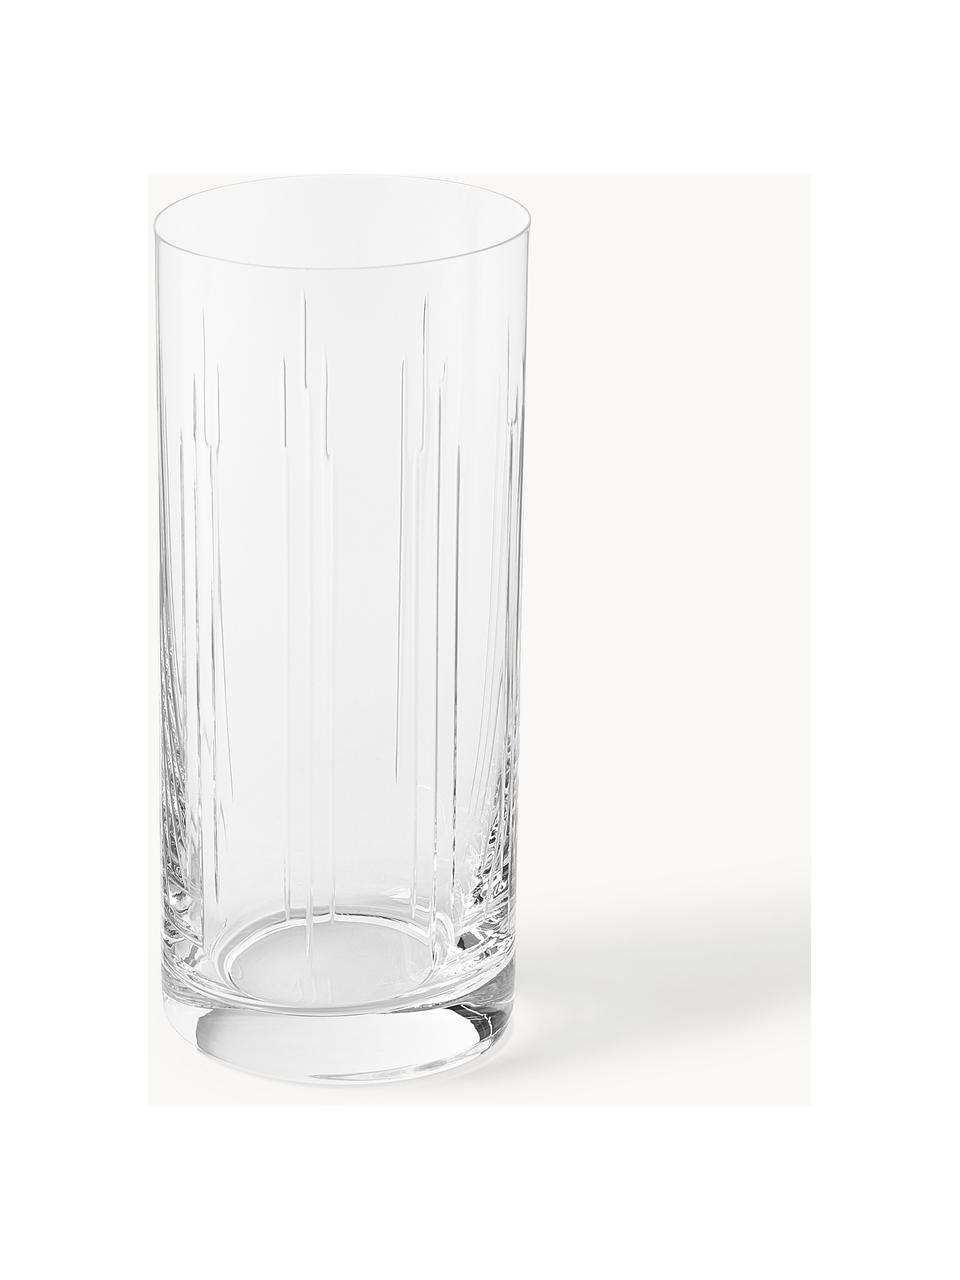 Bicchieri long drink in cristallo Felipe 4 pz, Cristallo, Trasparente, Ø 6 x Alt. 15 cm, 300 ml